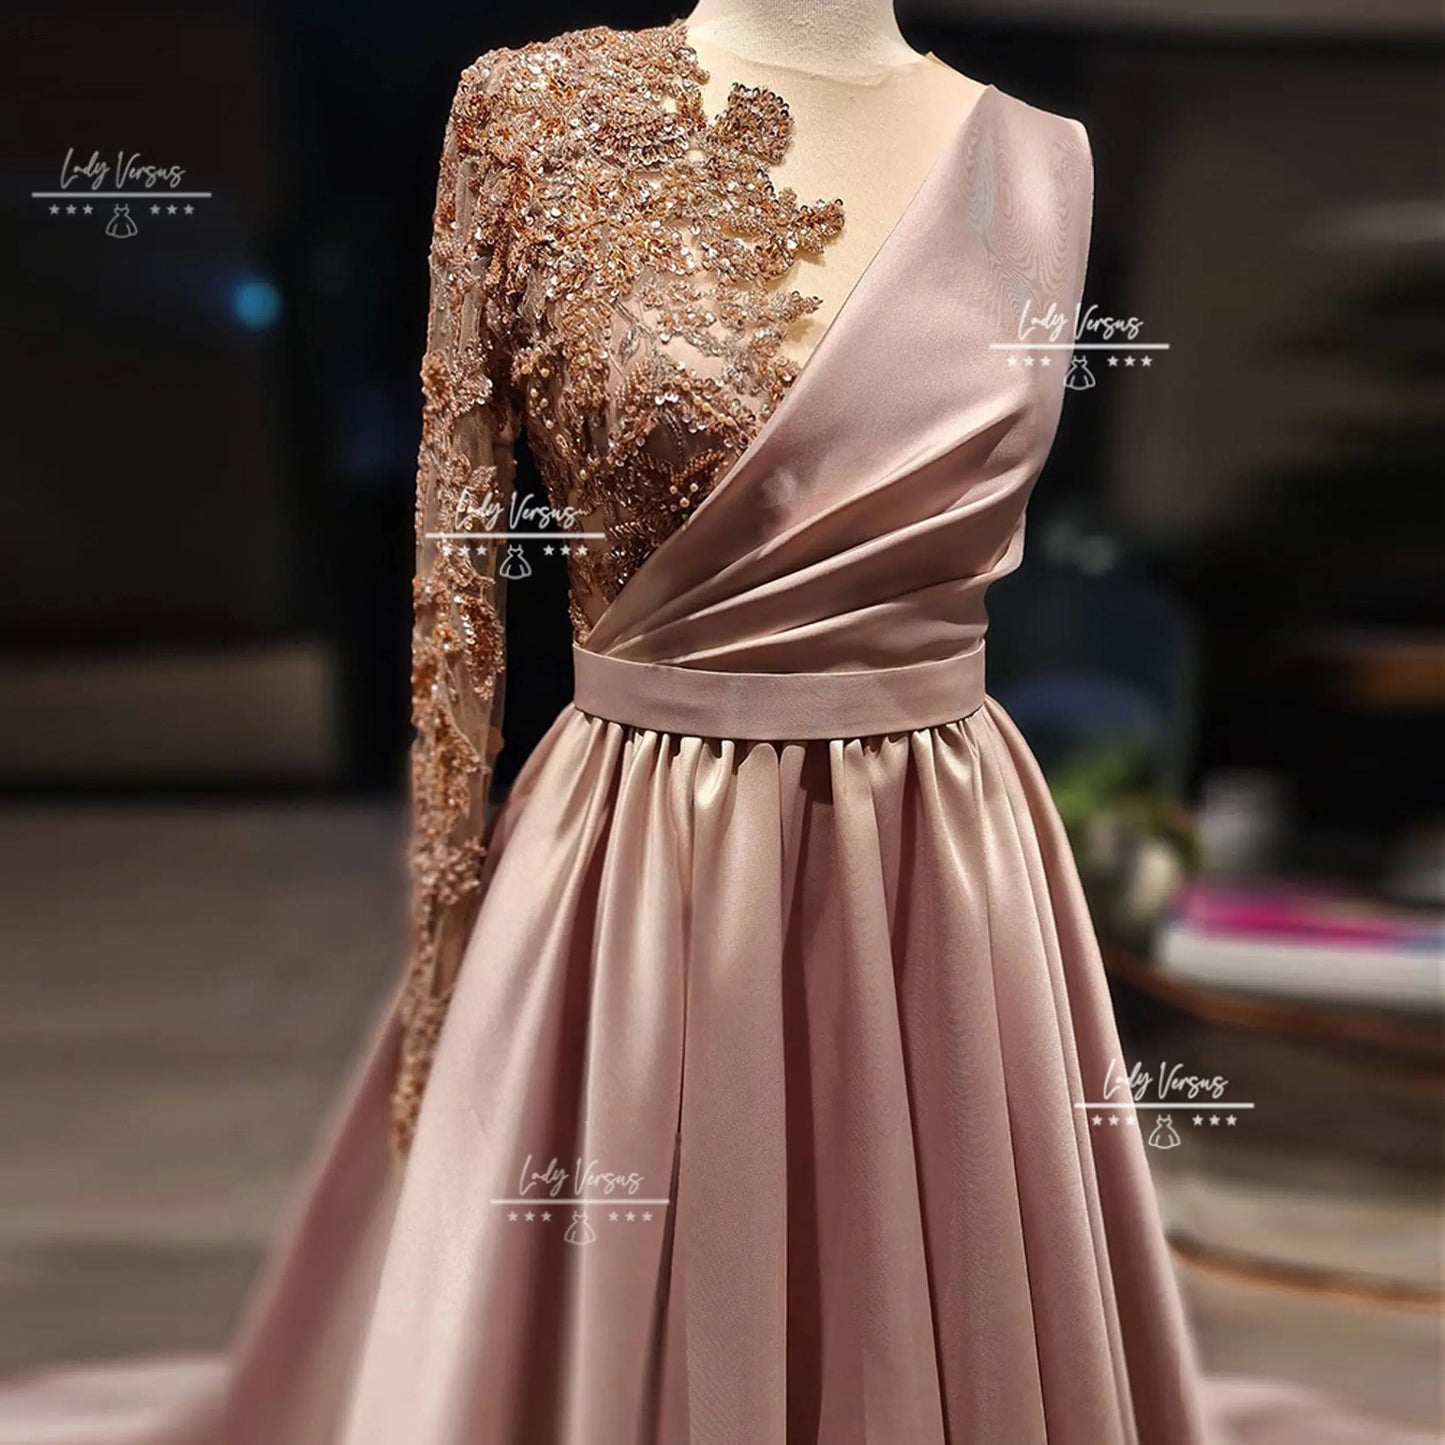 Luxury Satin Beaded long sleeve dress / Wedding Guest dress/ evening gown/celebrity dress/ Prom/Party Dress/ red carpet dress